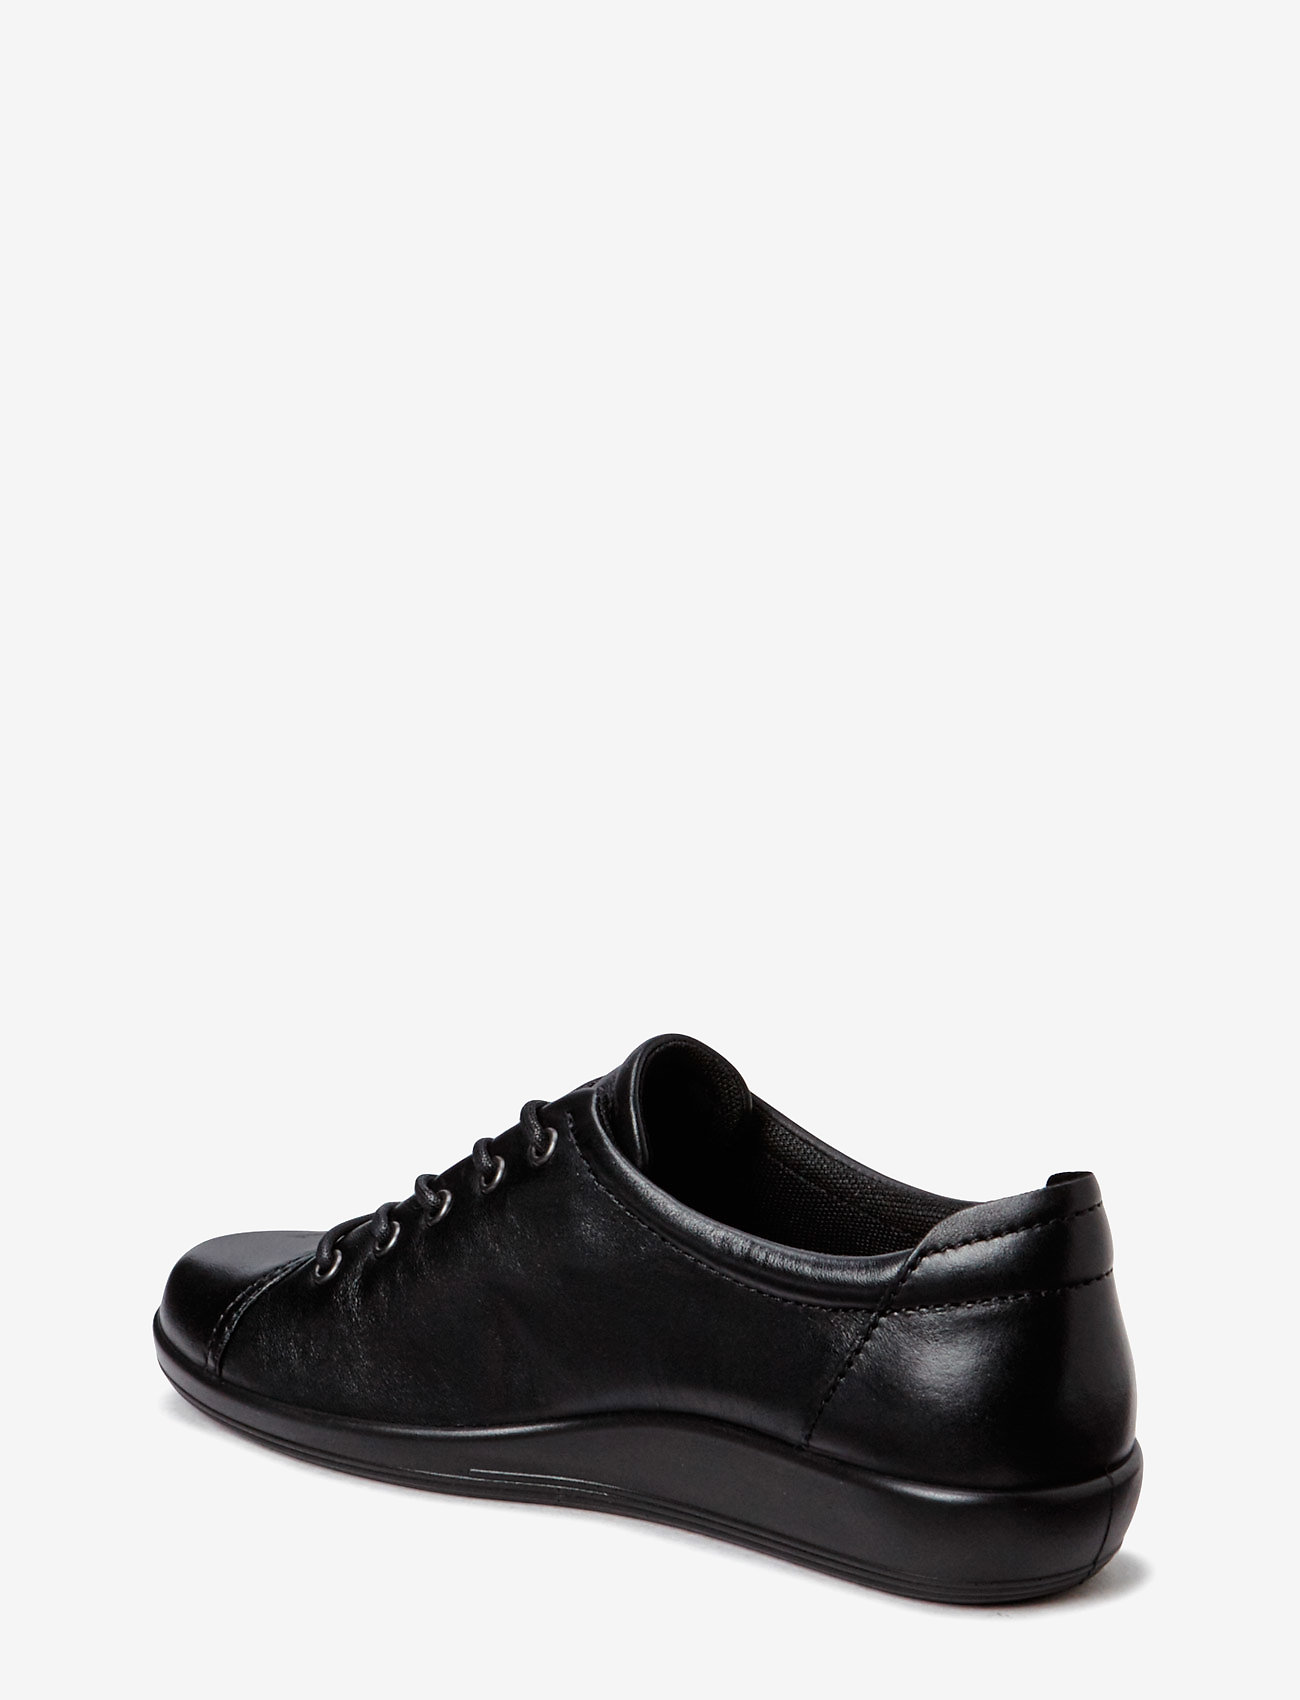 ECCO - SOFT 2.0 - niedrige sneakers - black with black sole - 1